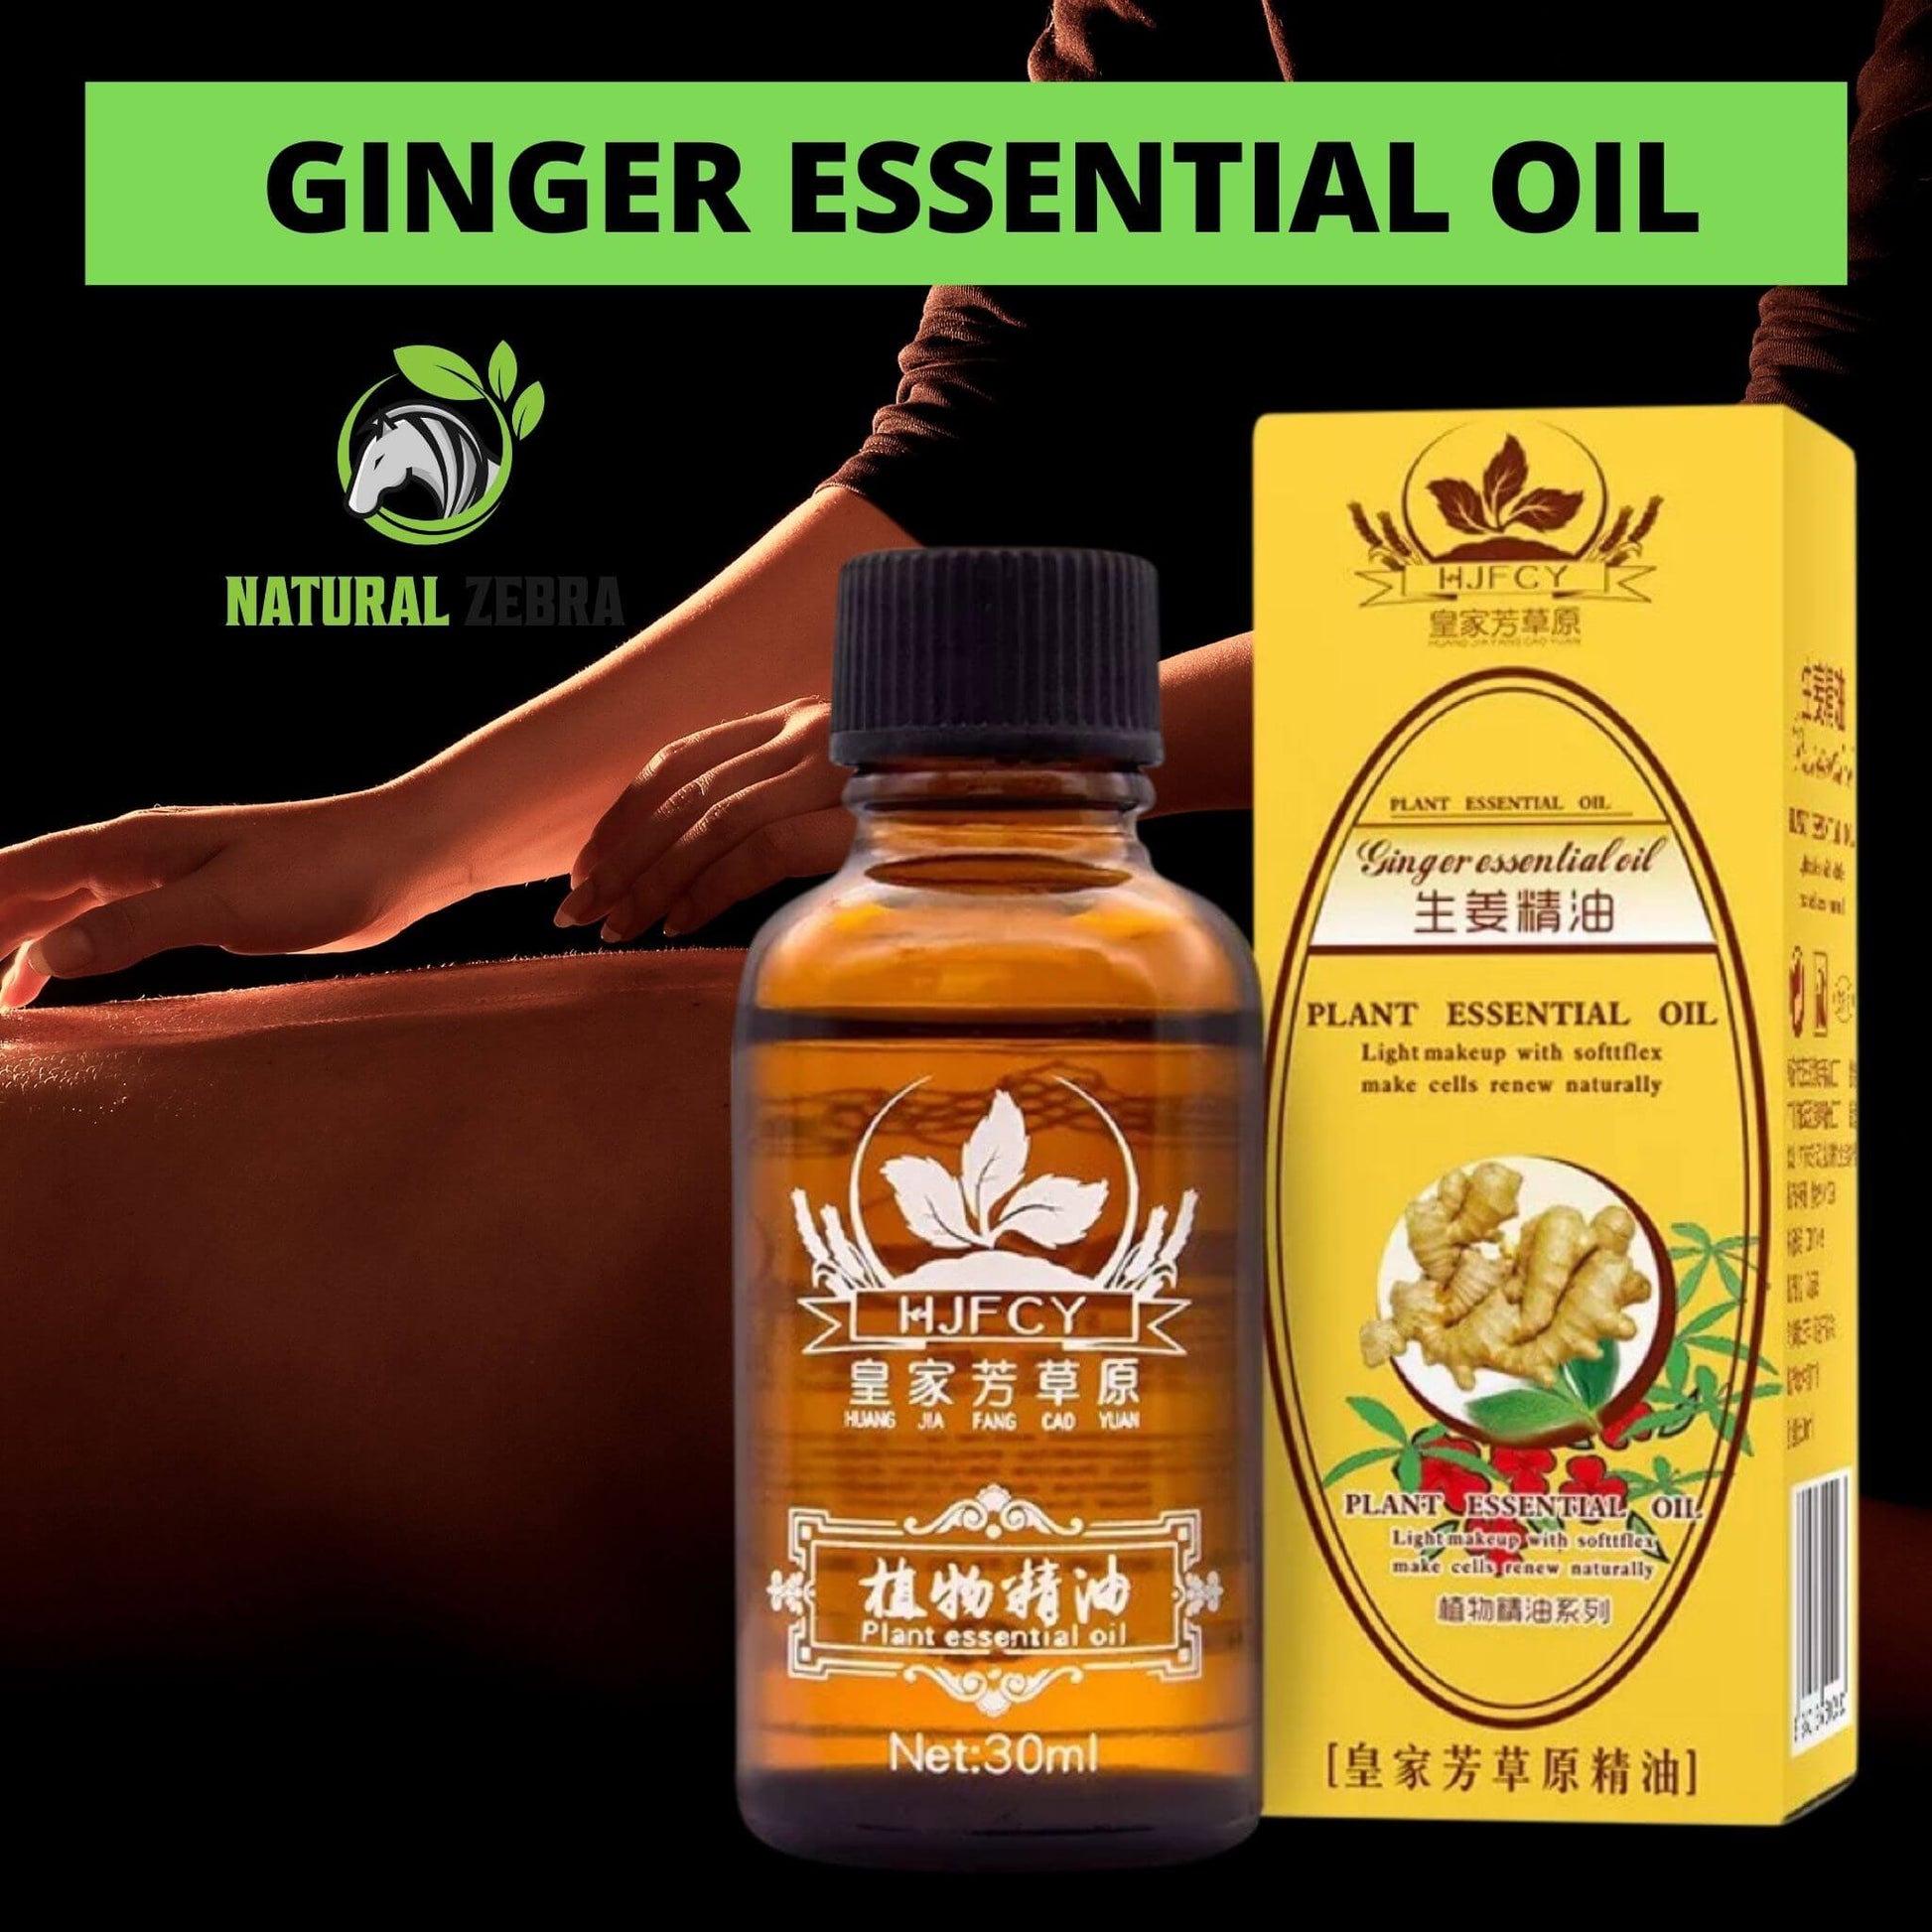 Ginger Essential Oil - 30ml - 25 - NATURAL ZEBRA